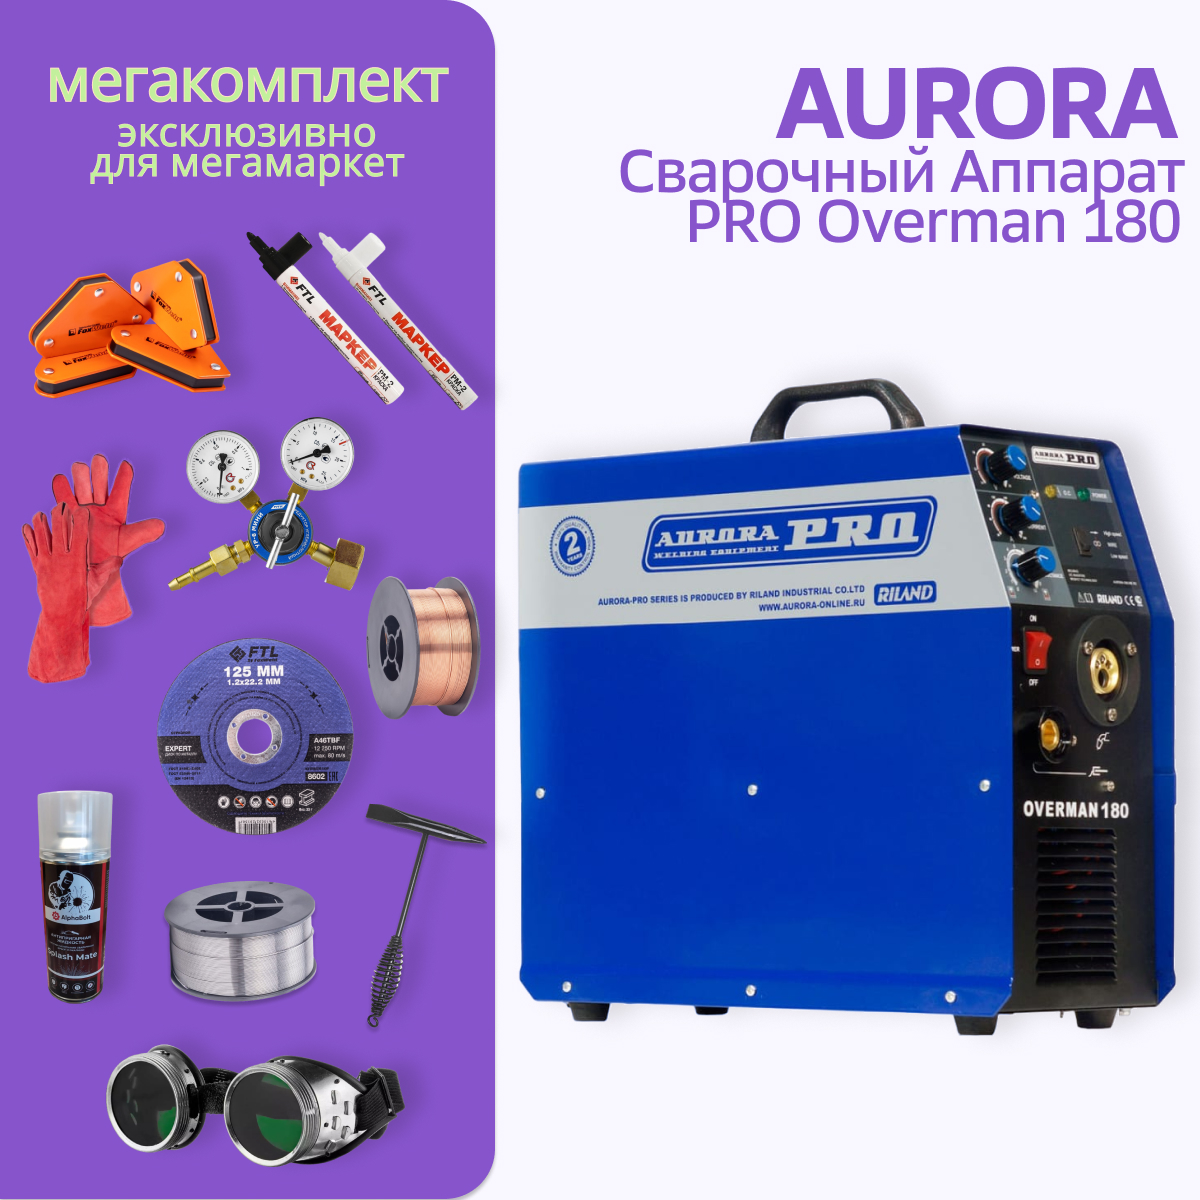 Сварочный полуавтомат Aurora PRO OVERMAN 180 + МЕГА комплект сварог инвертор сварочный mig 200 real n24002n маска краги 95883